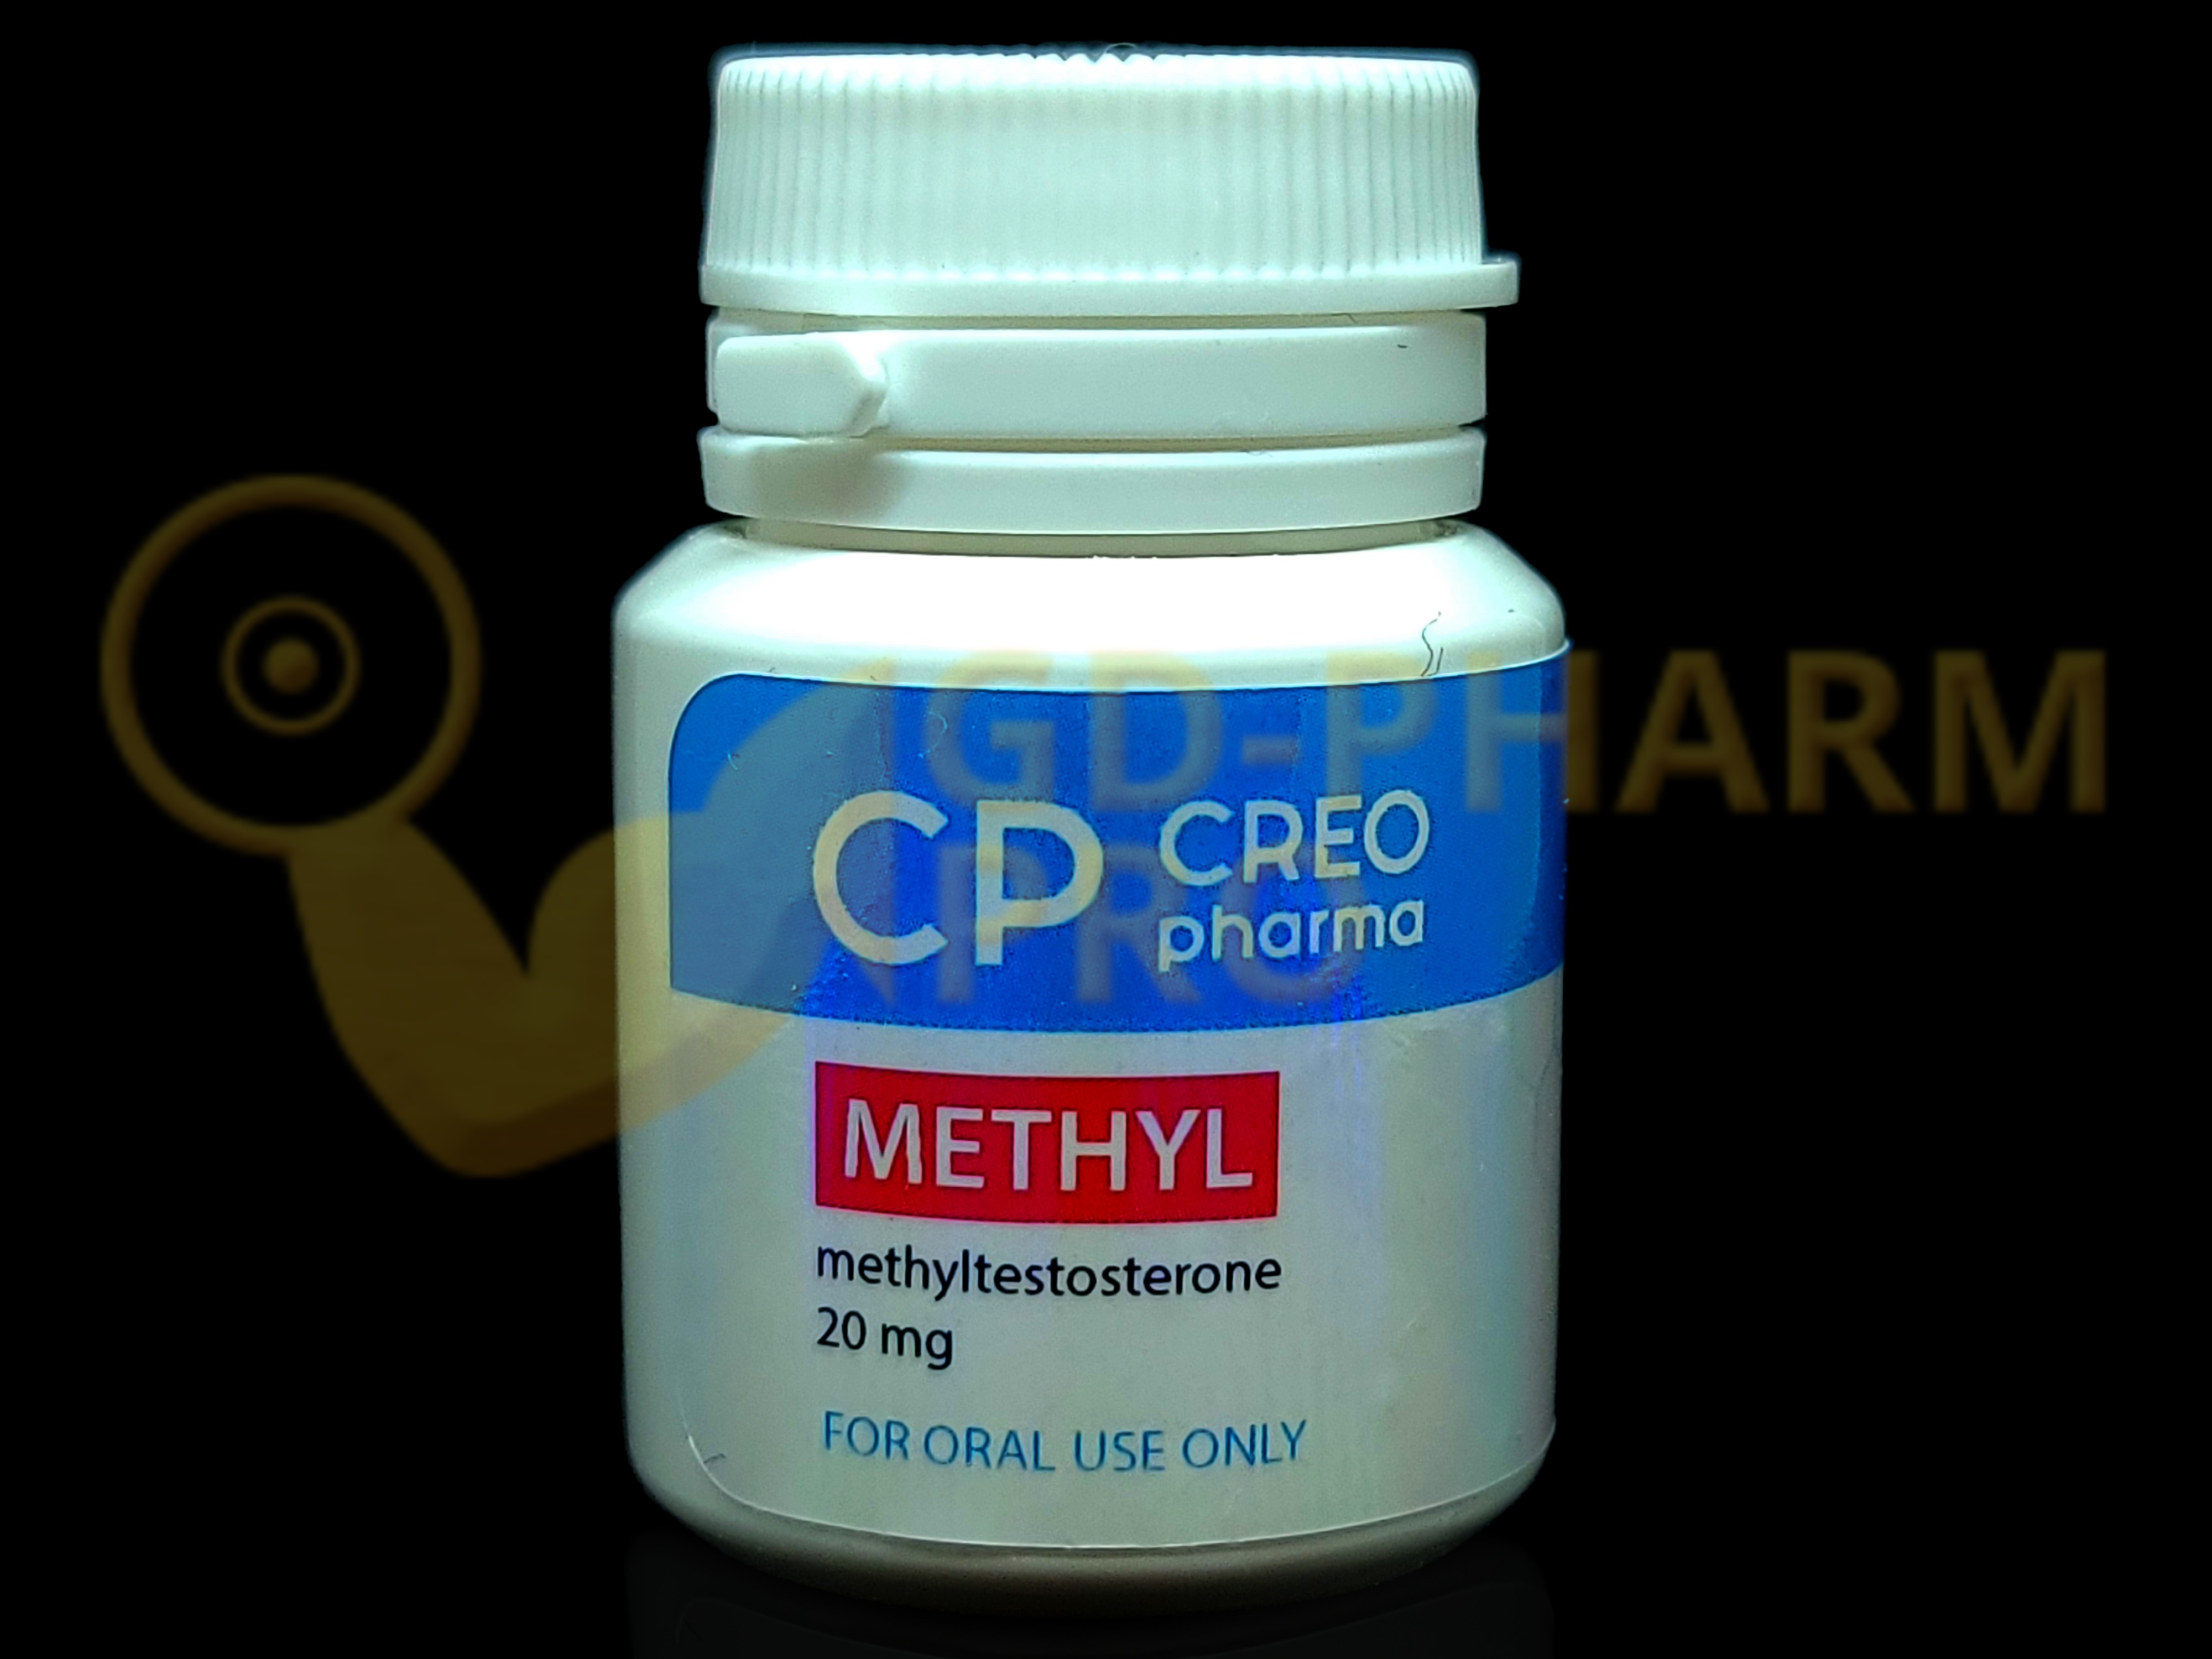 Methyl Creo Pharma